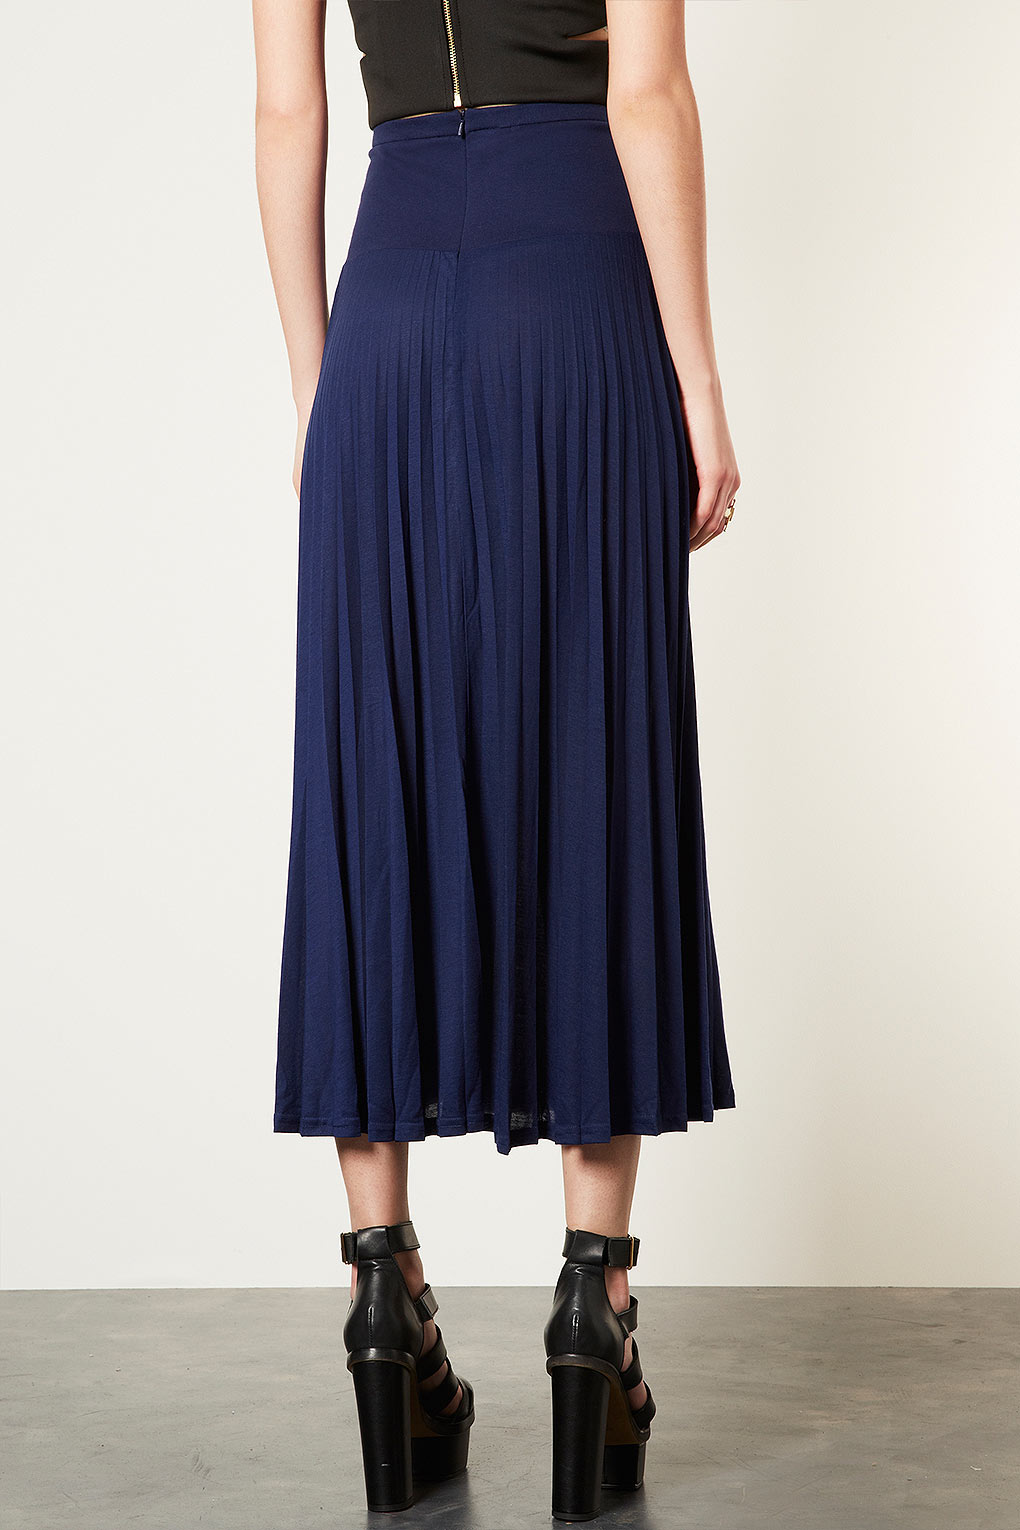 Lyst - Topshop High Waist Pleated Maxi Skirt in Blue